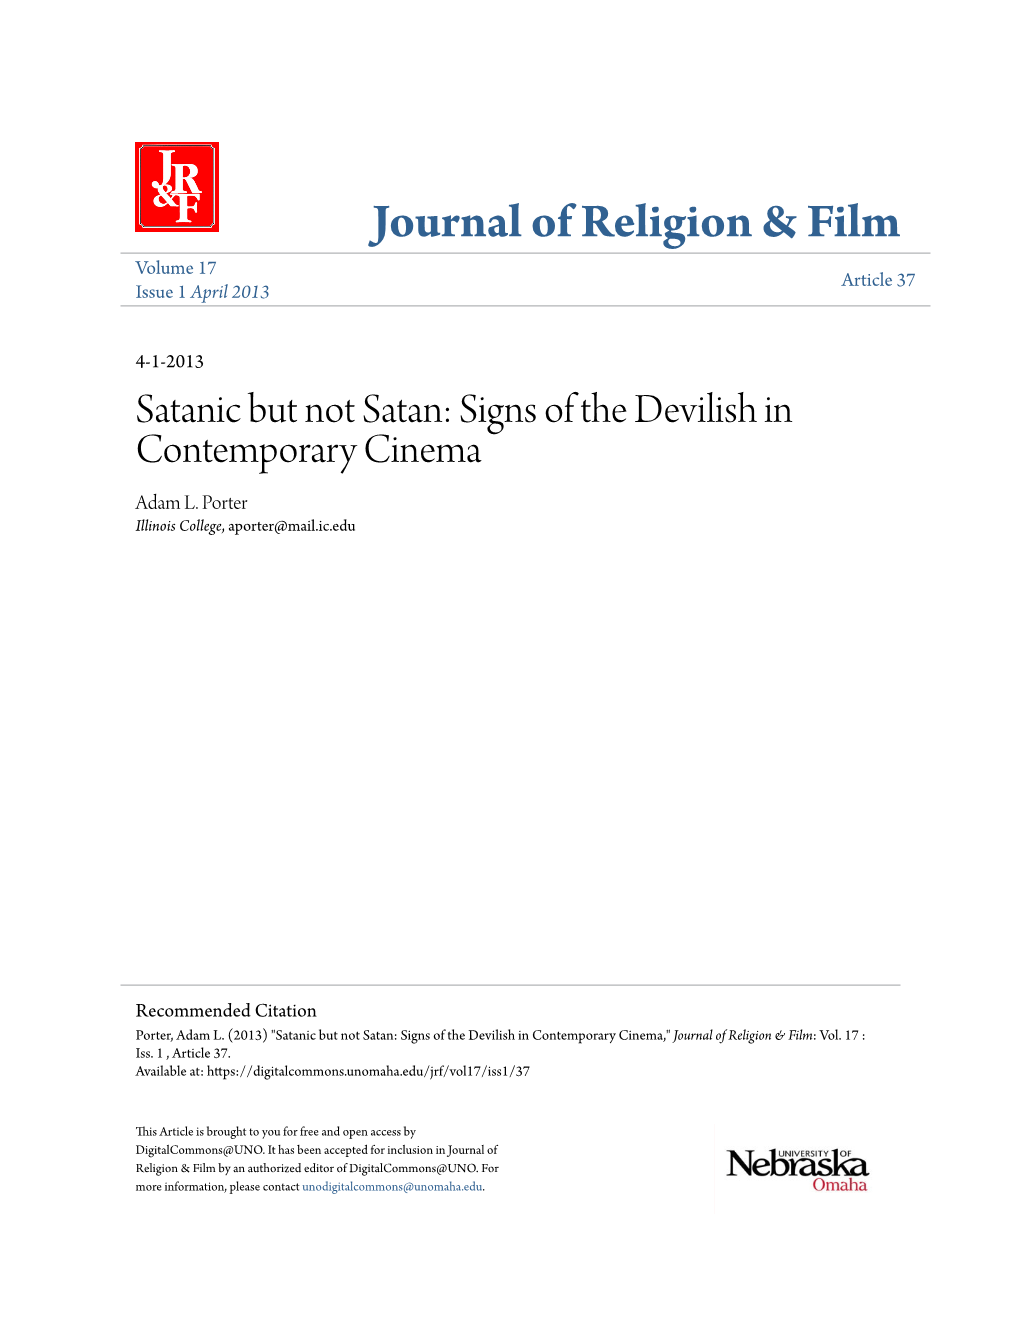 Satanic but Not Satan: Signs of the Devilish in Contemporary Cinema Adam L